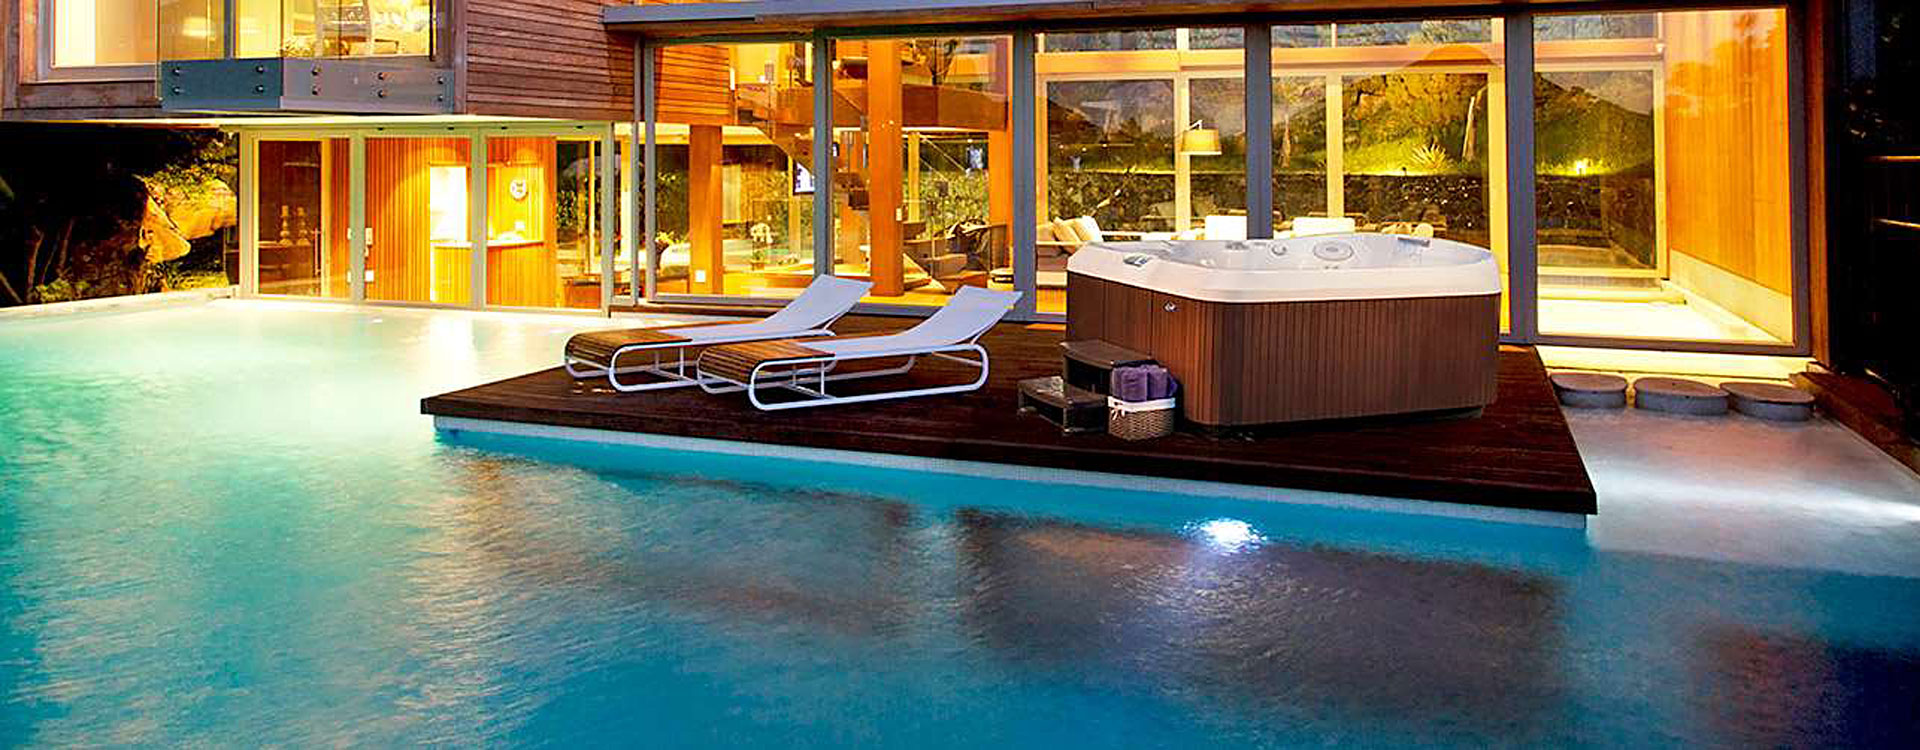 Paradise Pool and Spa Hot Tub